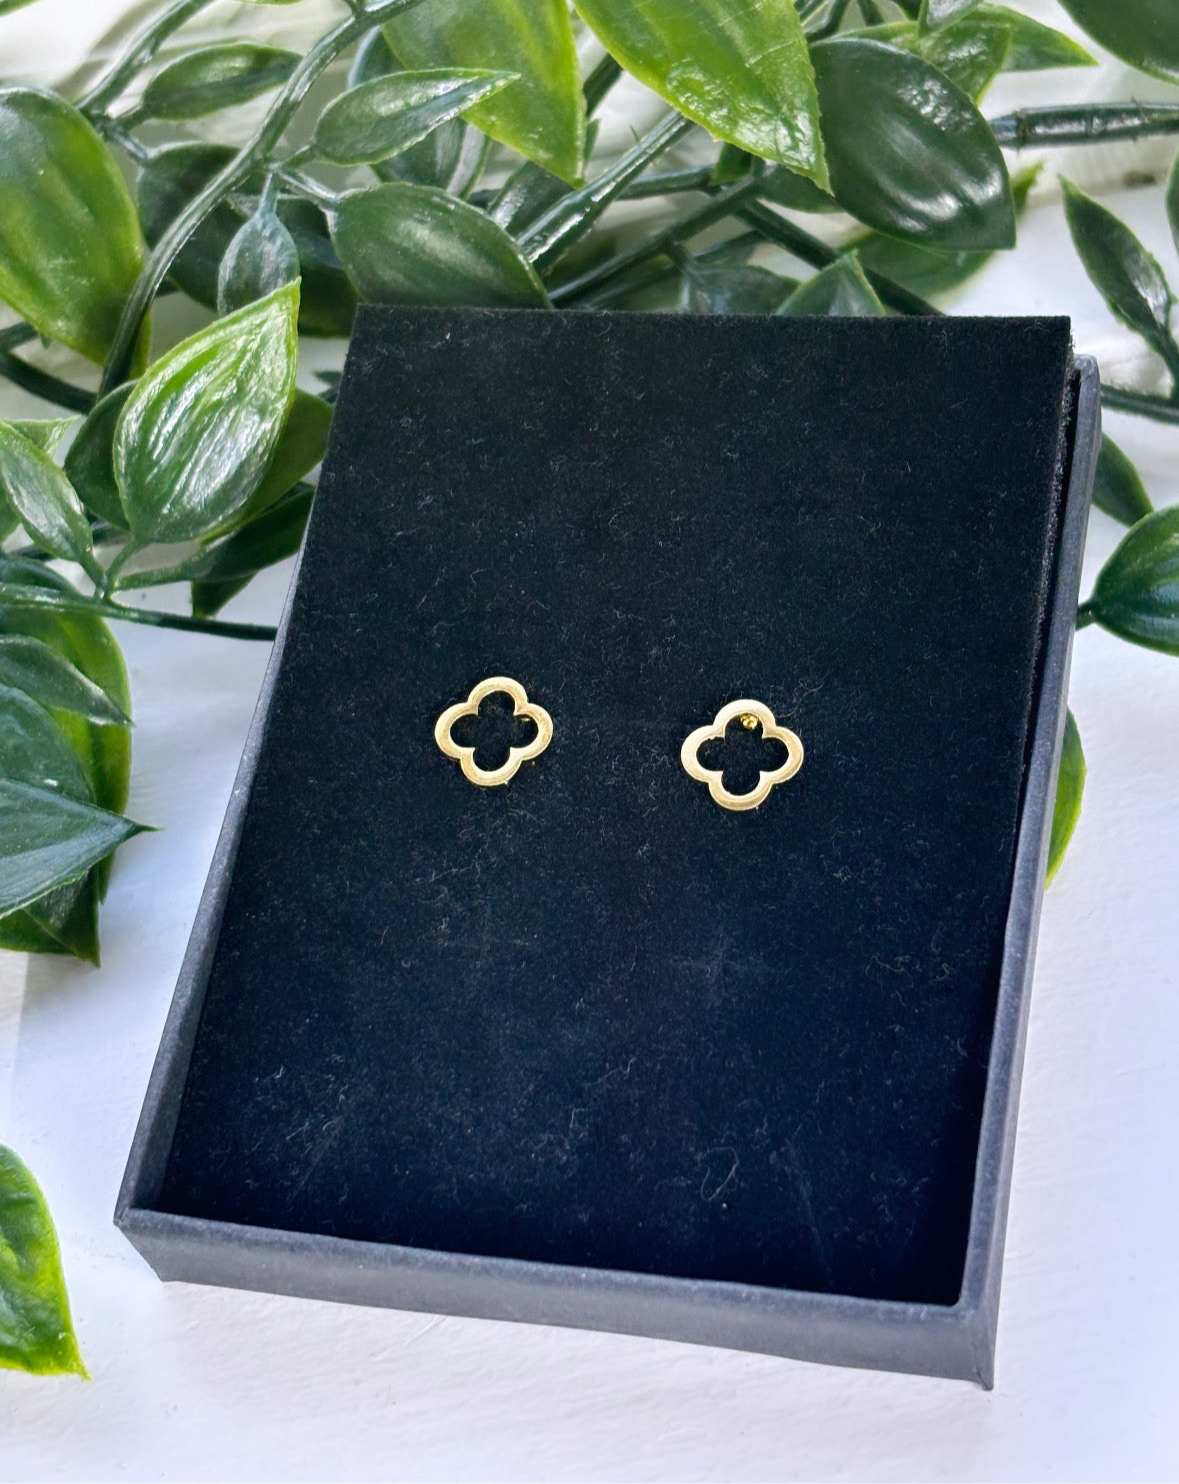 18k gold plated clover leaf stud earrings